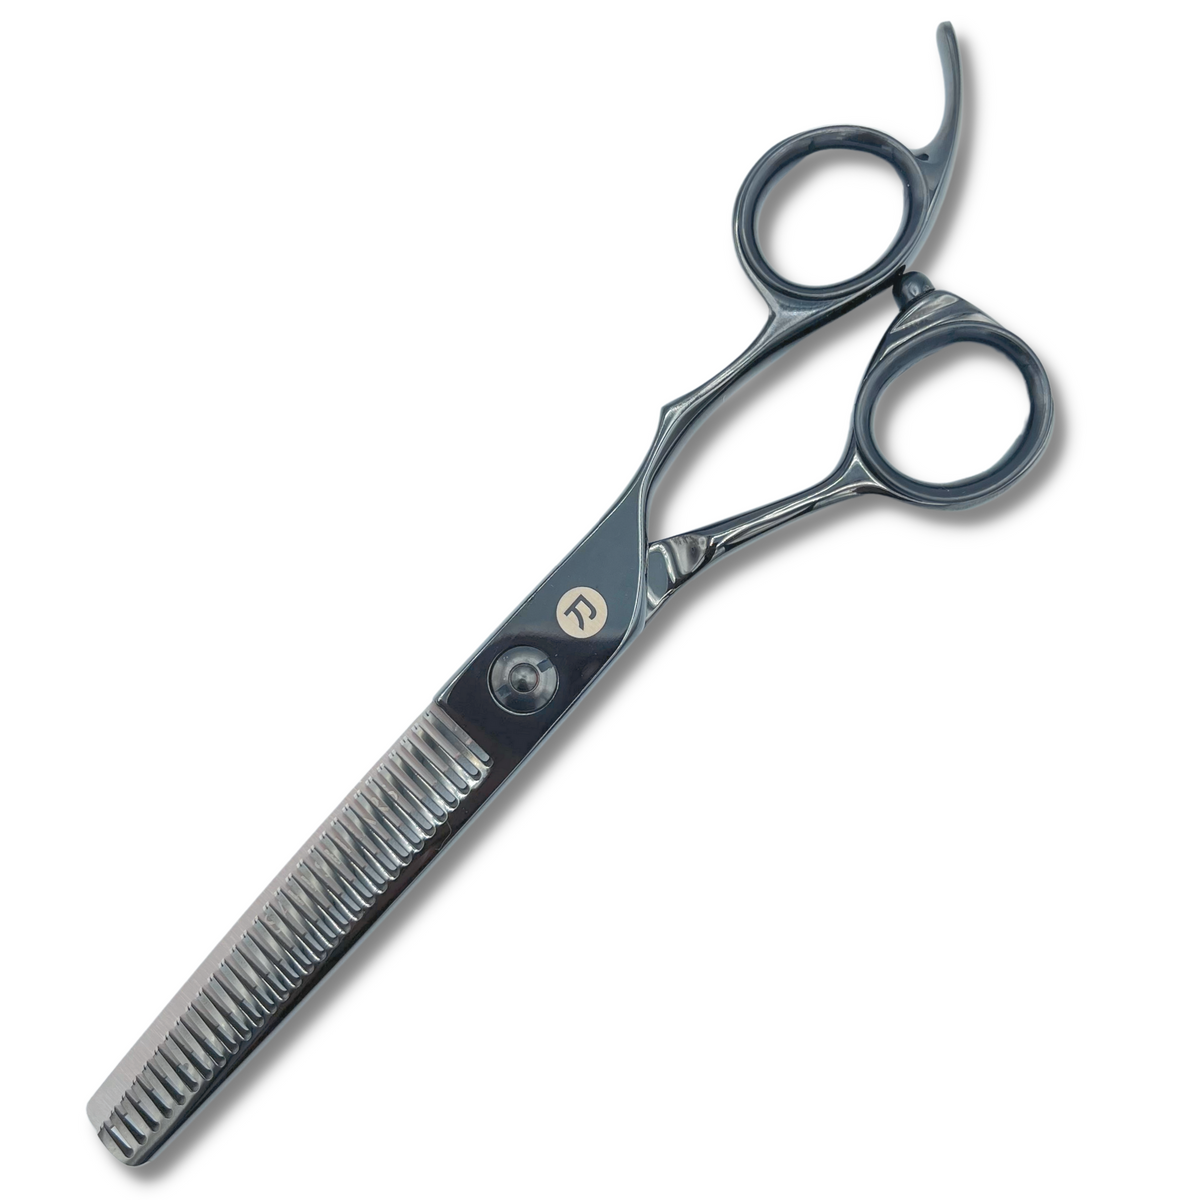  Saki Shears Tachi Thinning Shears - Skull Screw - 6 Inch  Professional Sharp Barber Hair Thinning Scissors - Japanese 440C Steel :  Beauty & Personal Care